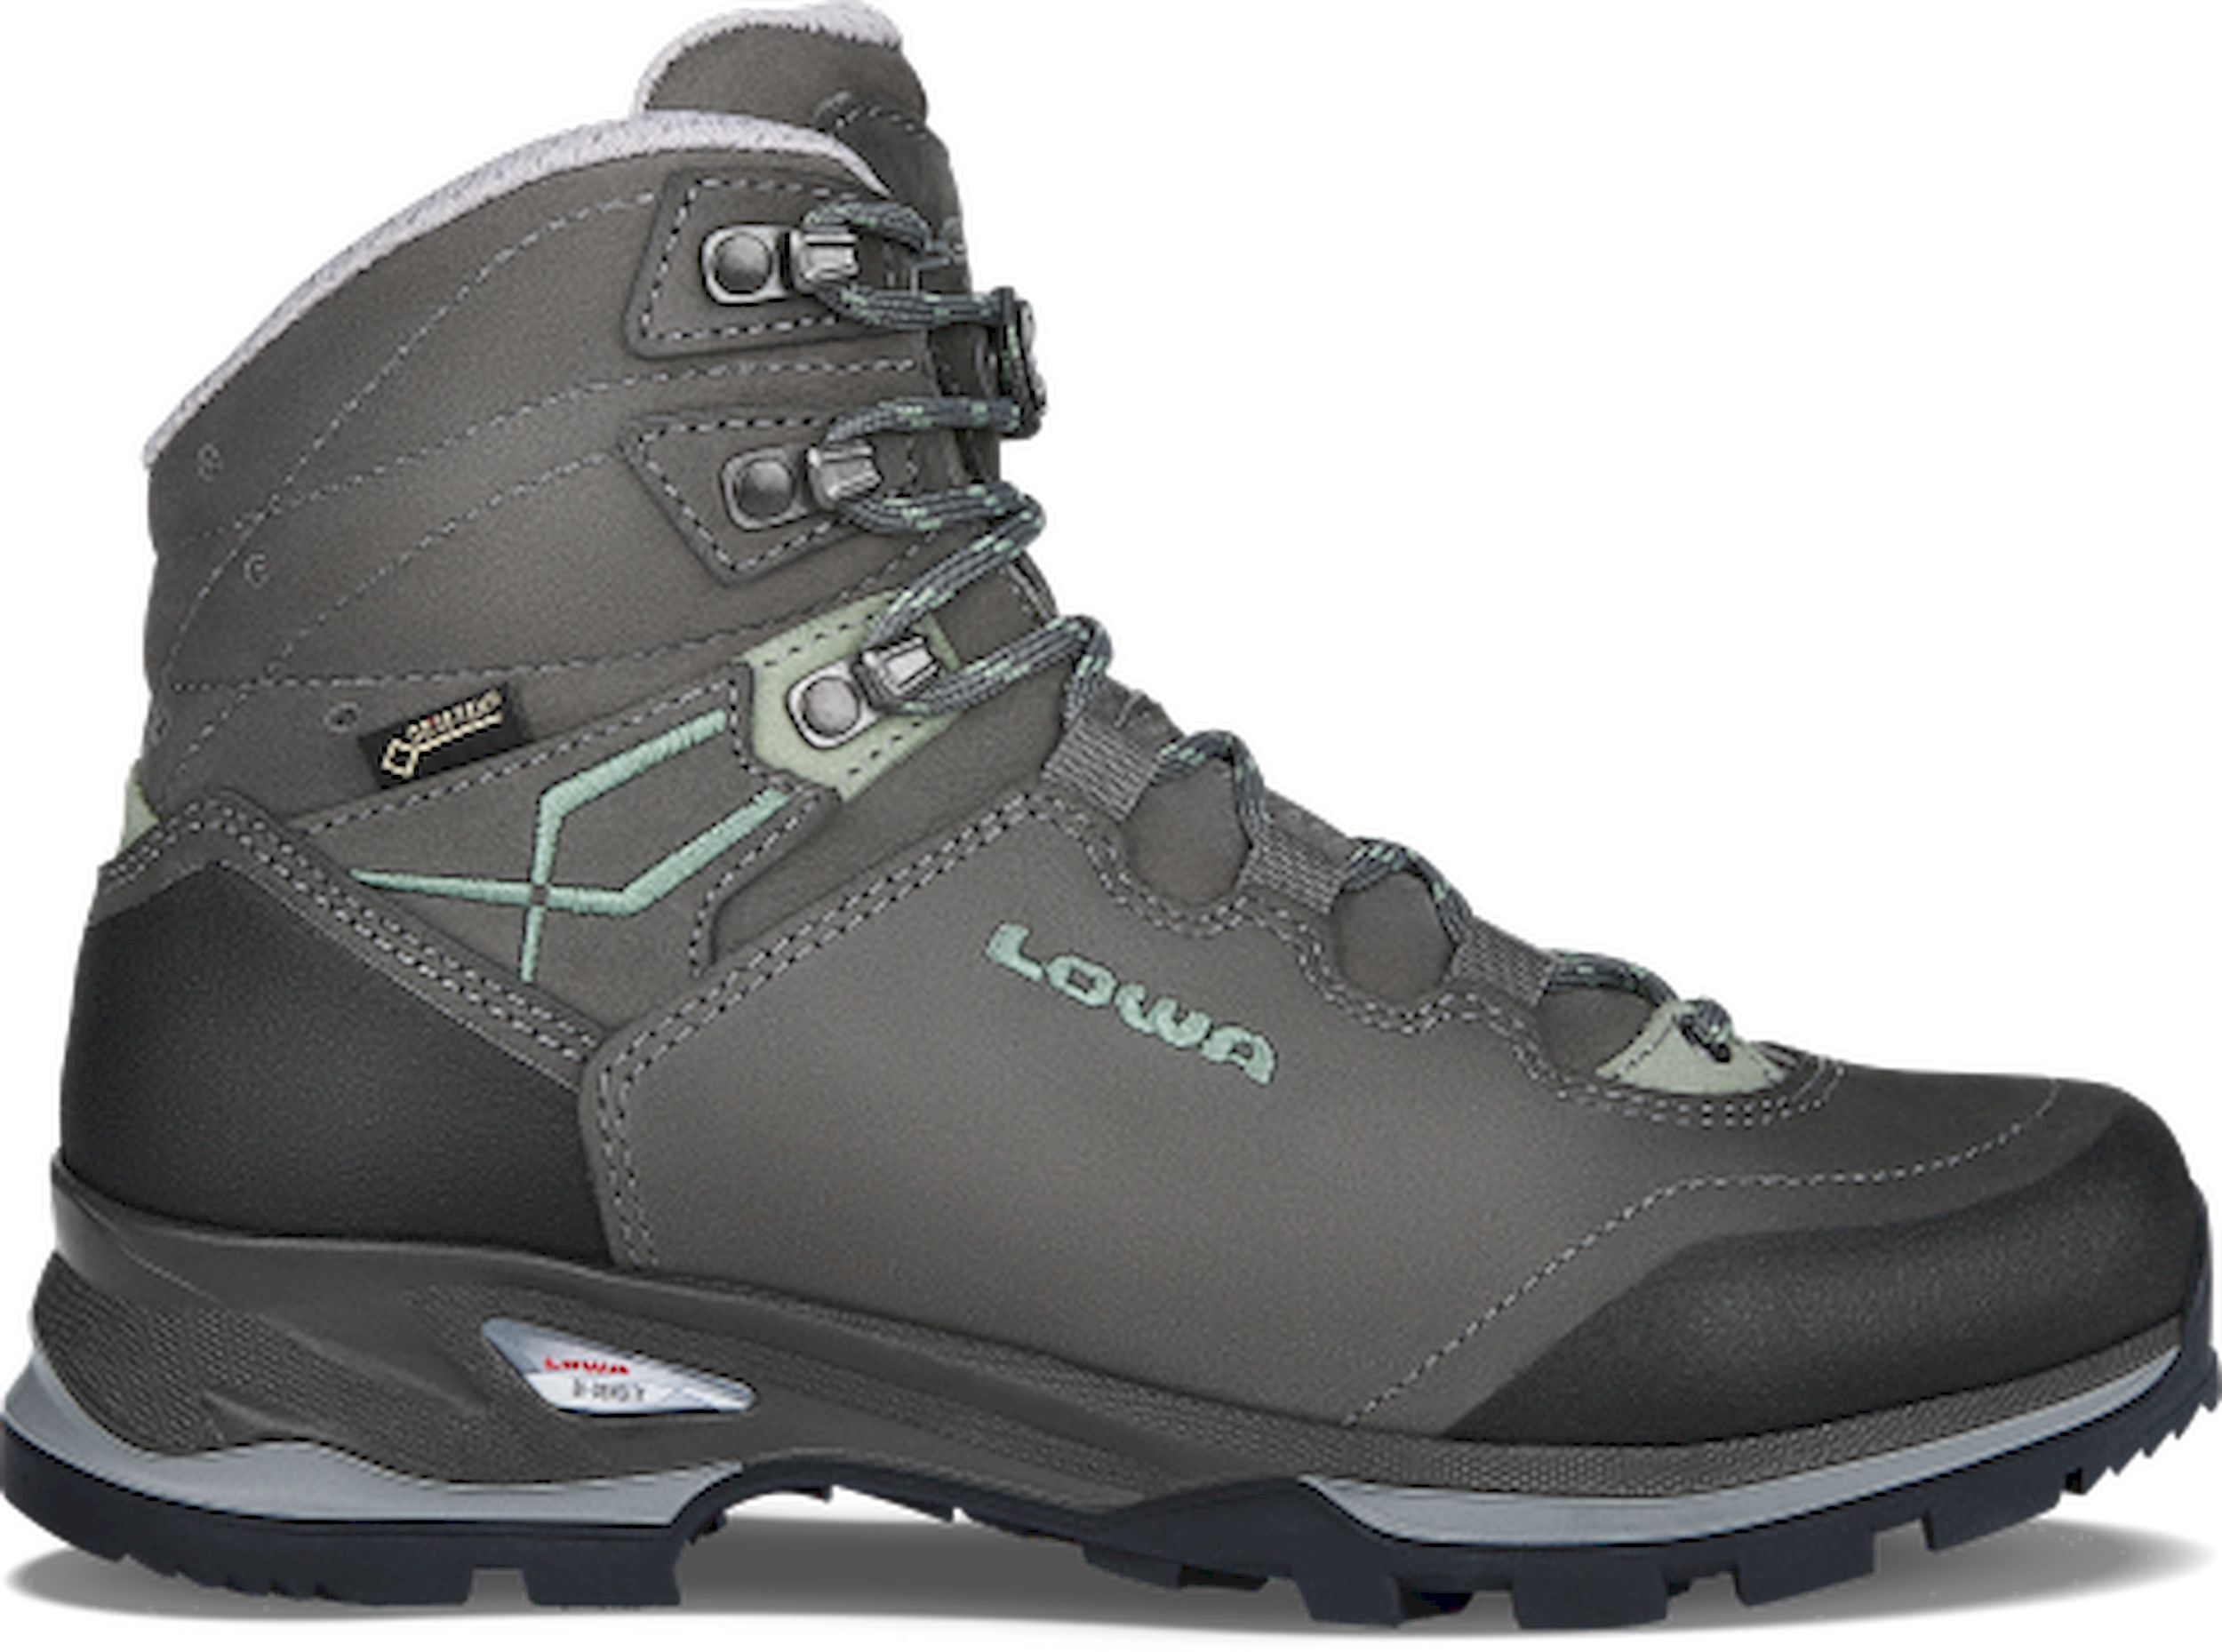 Lowa - Lady Light GTX® - Hiking Boots - Women's